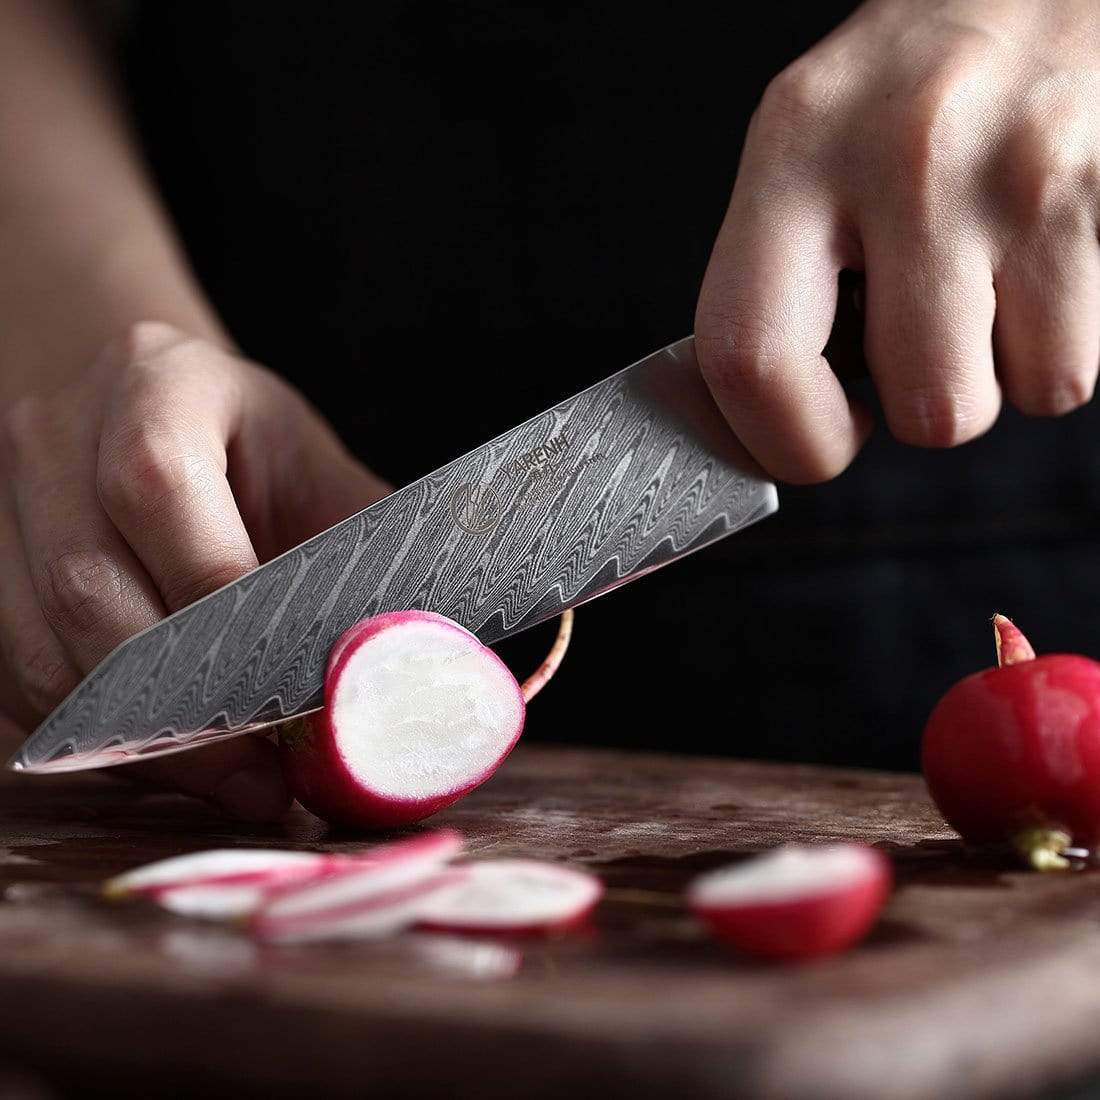 Damascus Utility Fruit Knife 5 inch-KTF Series yarenh Damascus Fruit knife